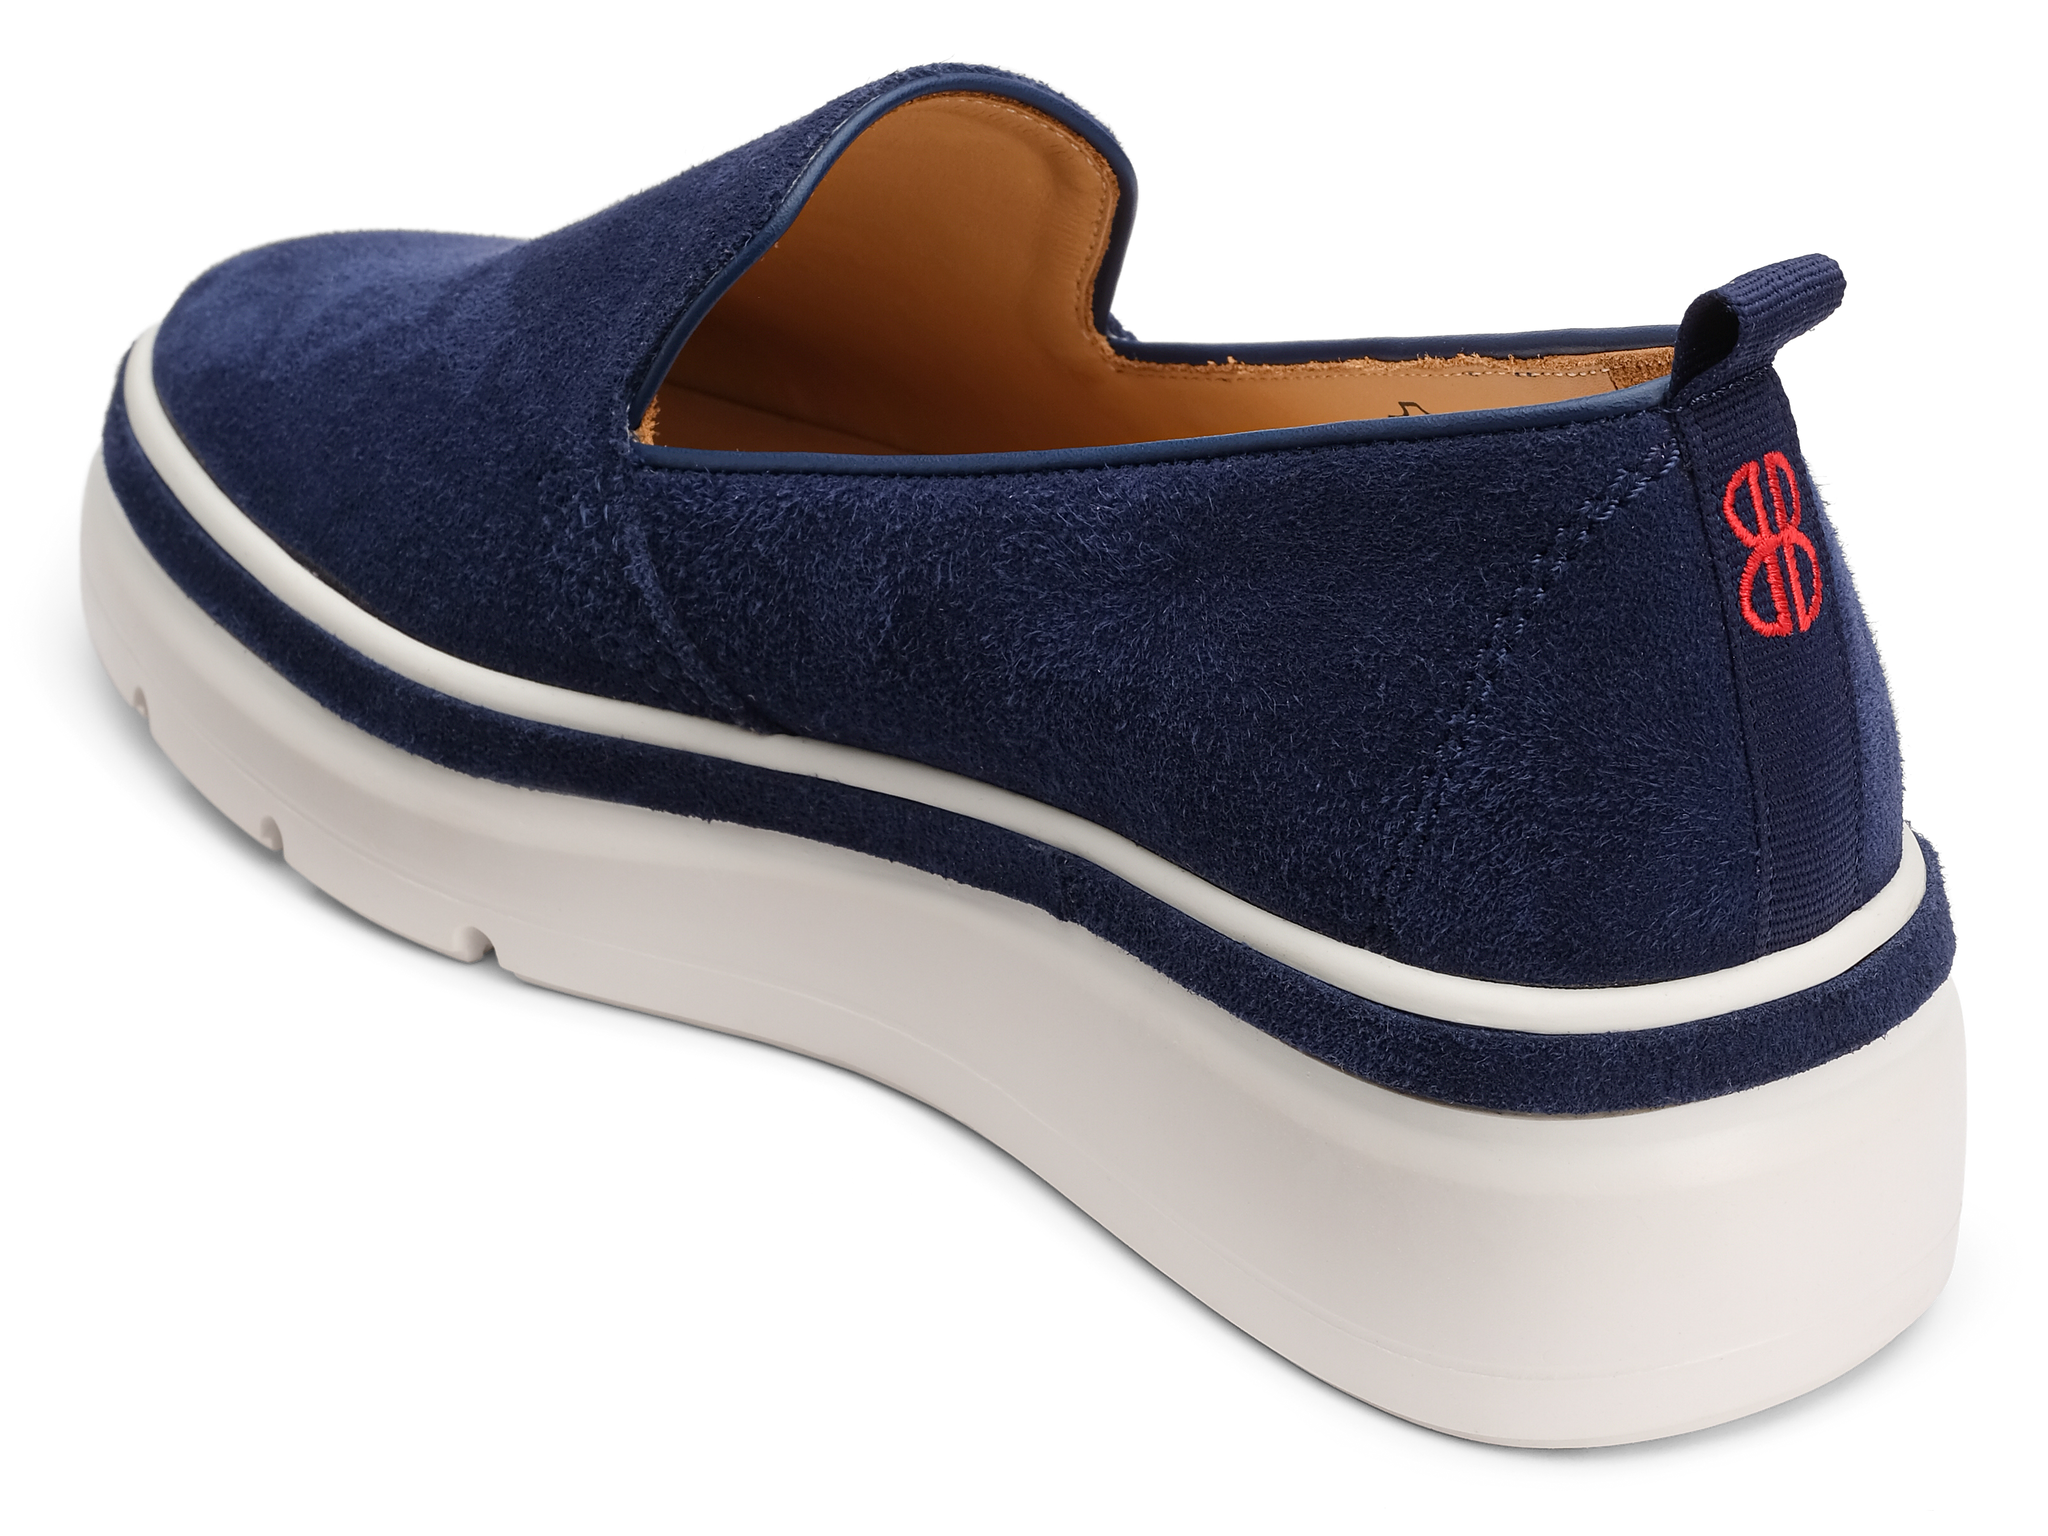 Sutton Suede Sneaker - Blueberry